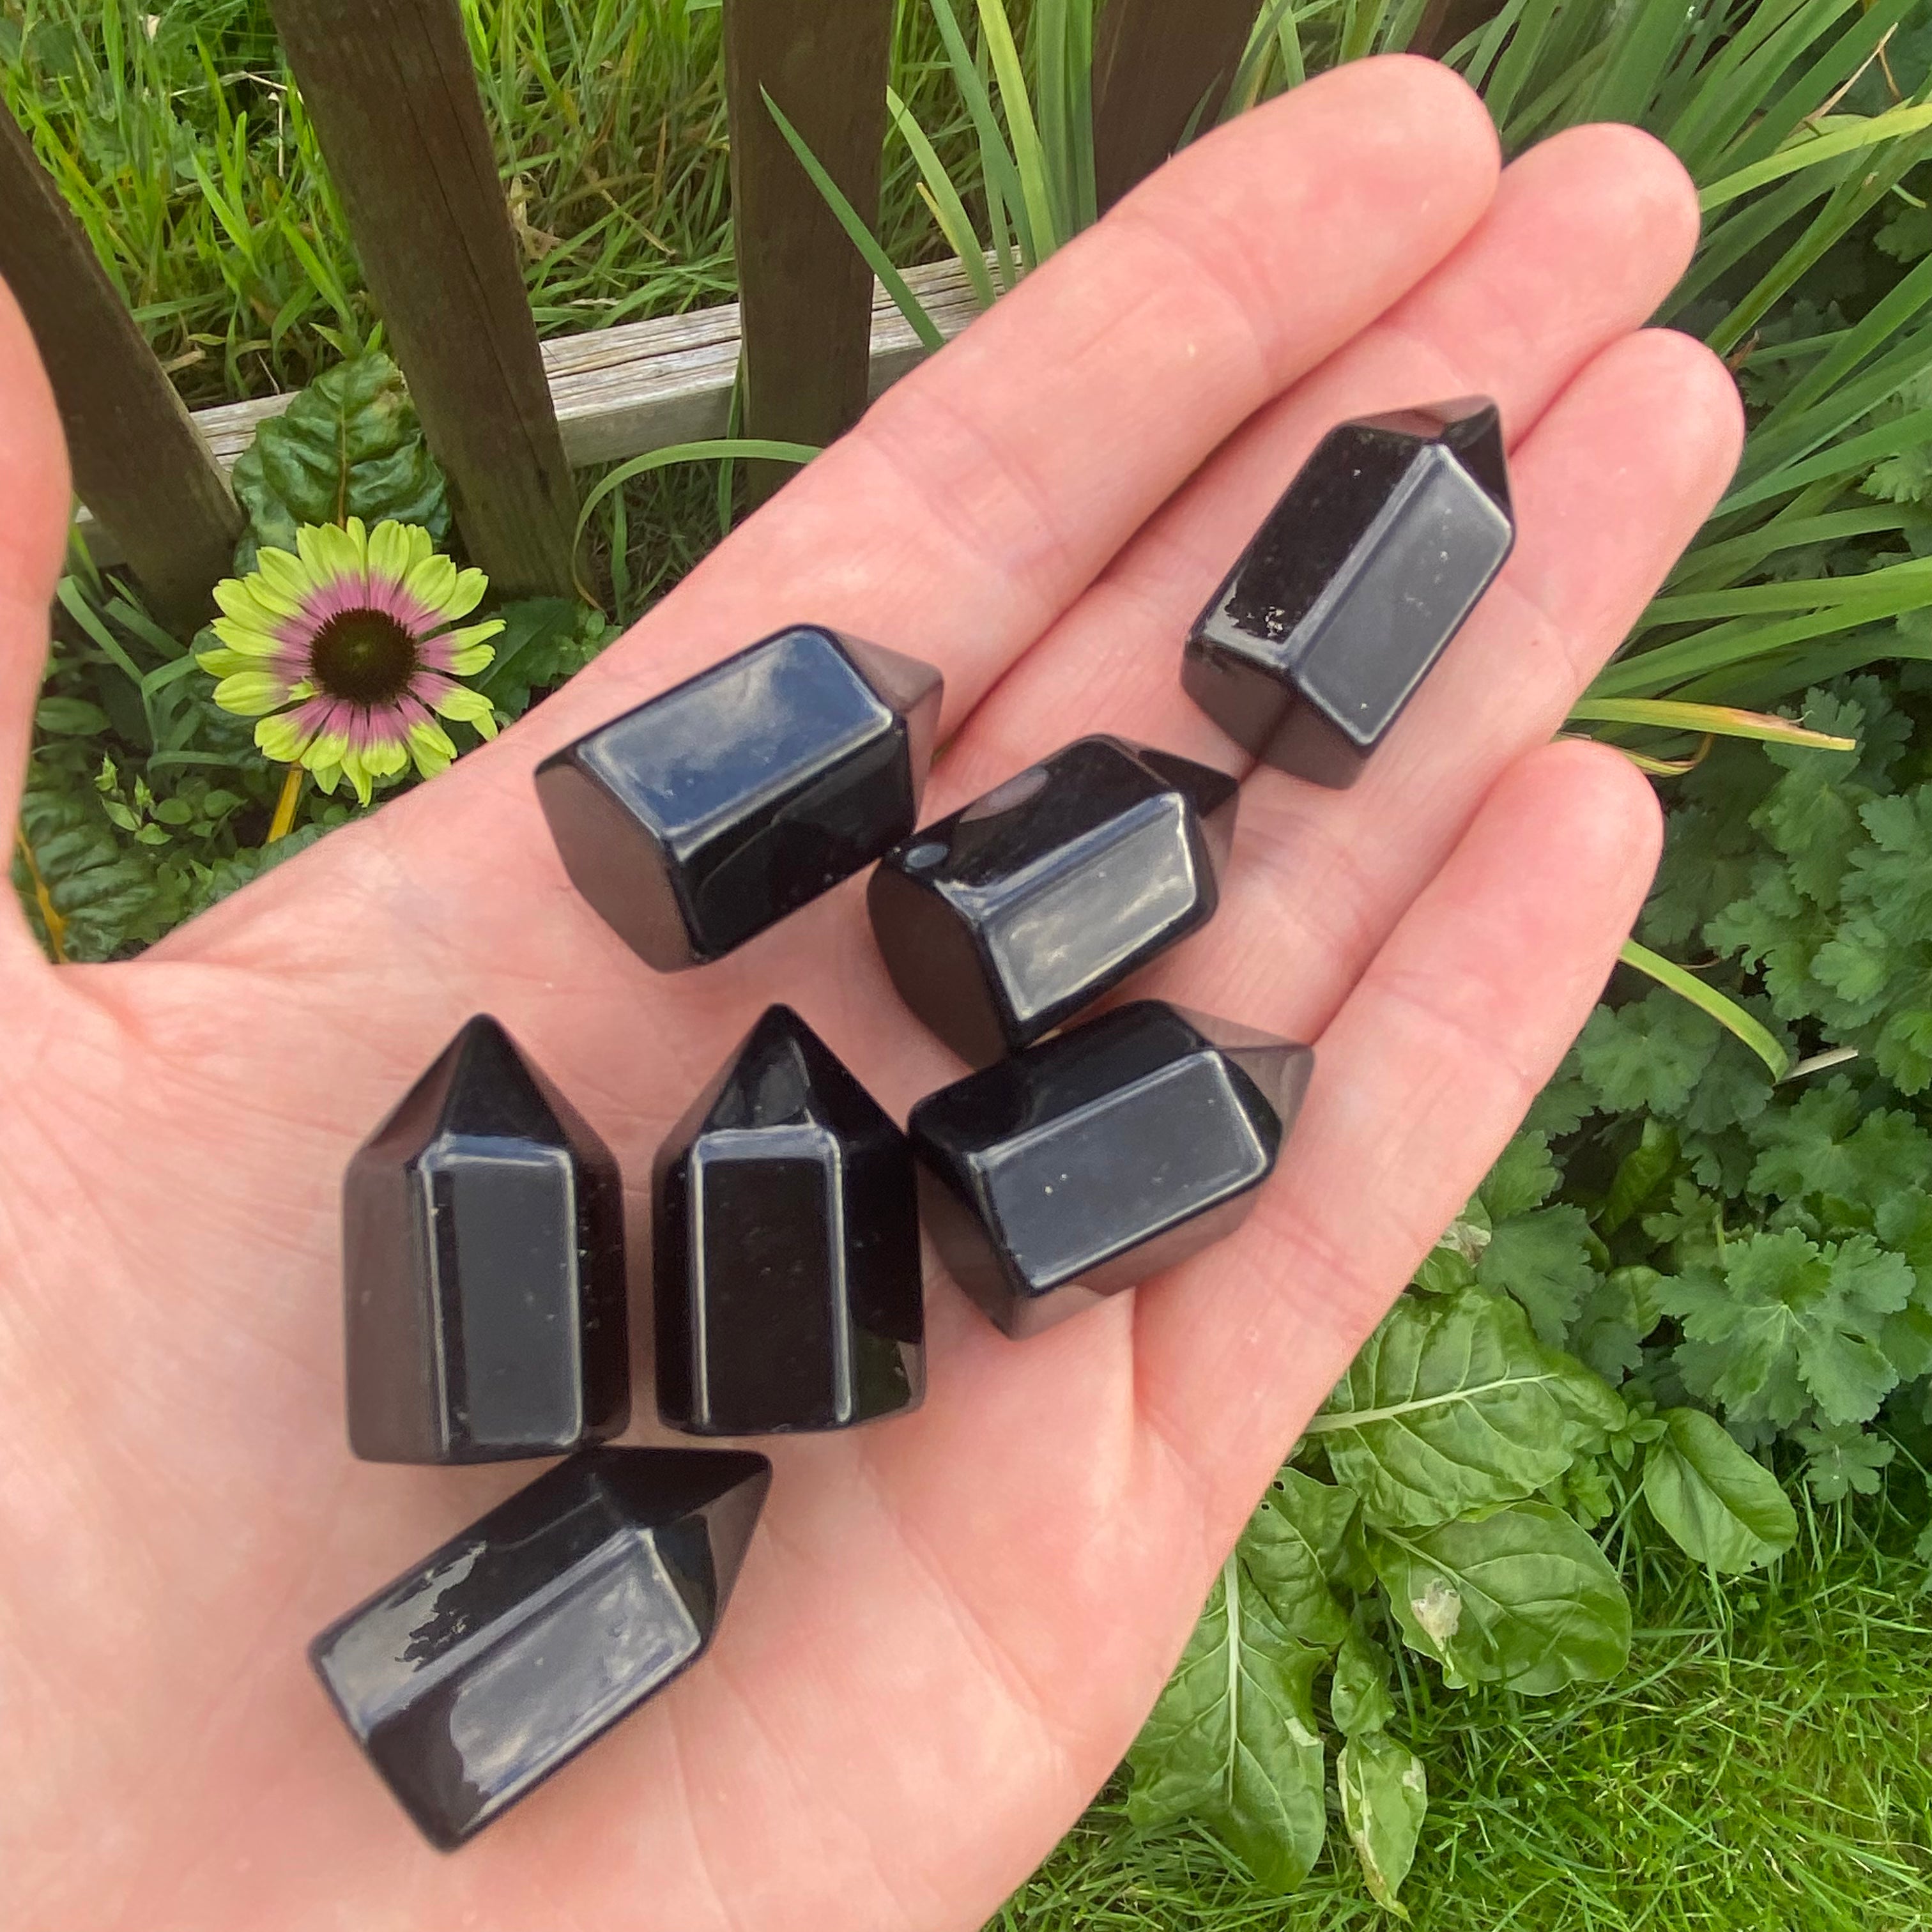 Mini Obsidian Crystal Point